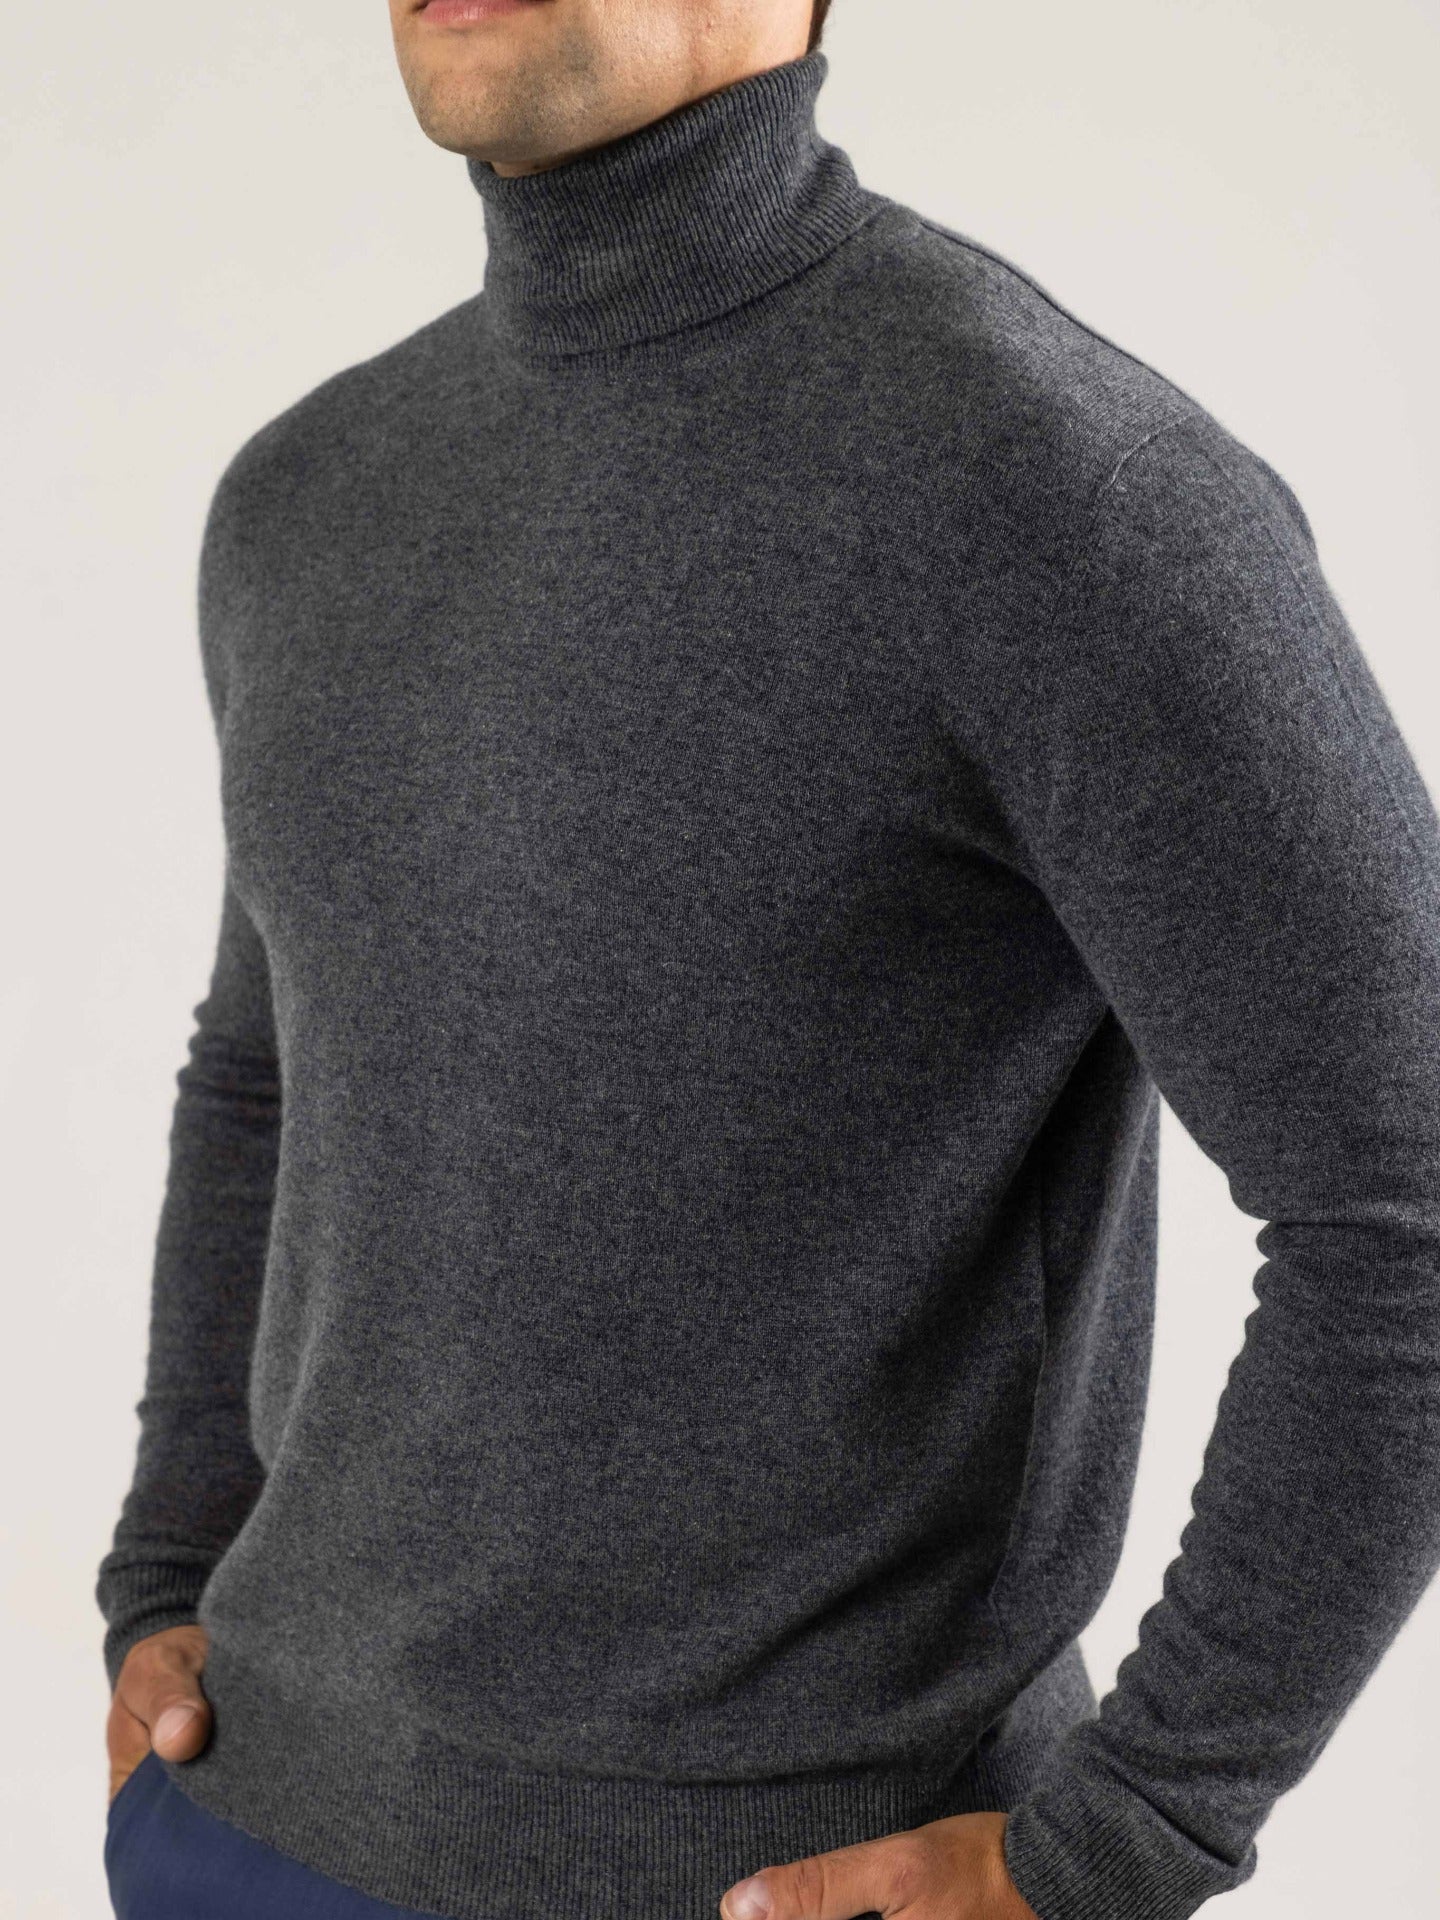 Men's Cashmere Basic Turtle Neck Sweater Plum Kitten - Gobi Cashmere